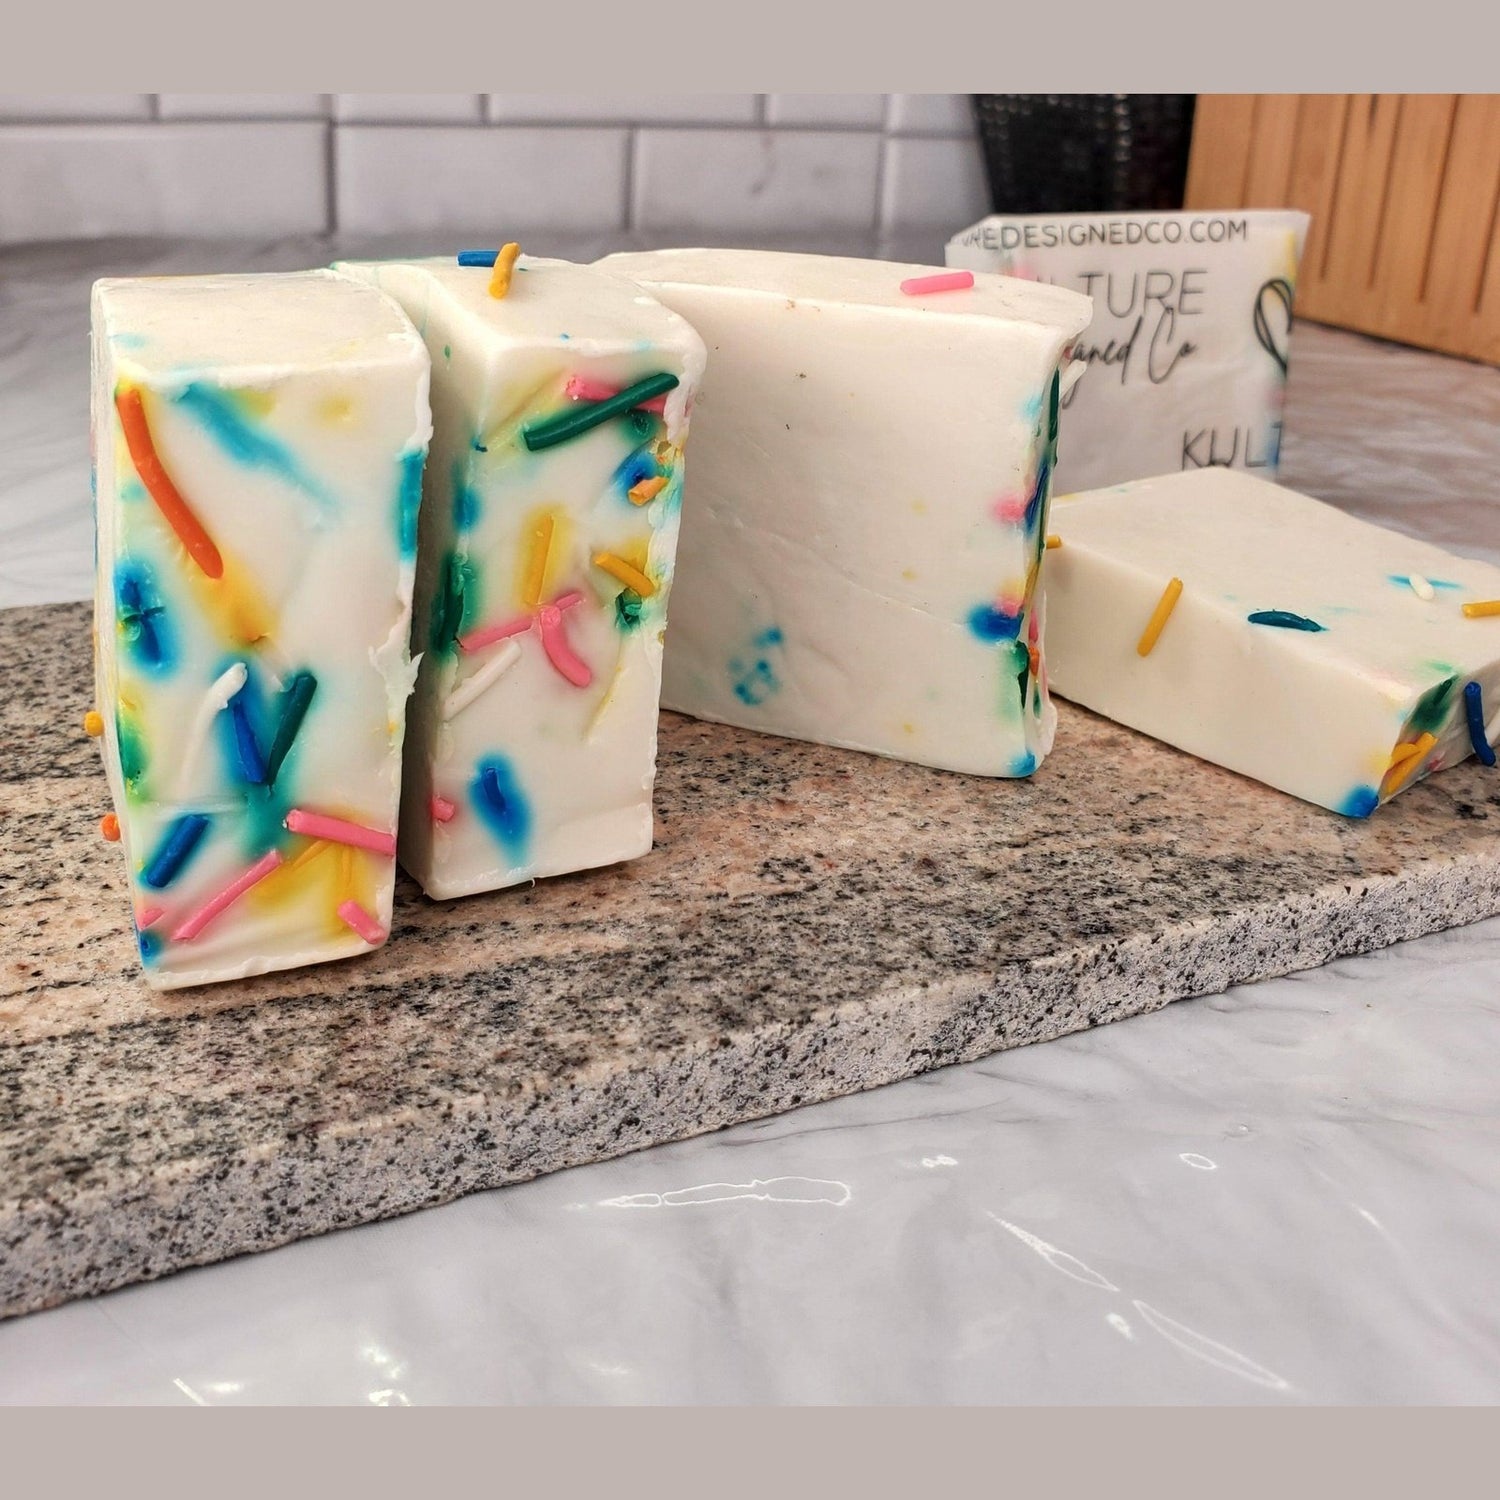 BIRTHDAY CAKE SOAP BAR - Kulture Designed Co.